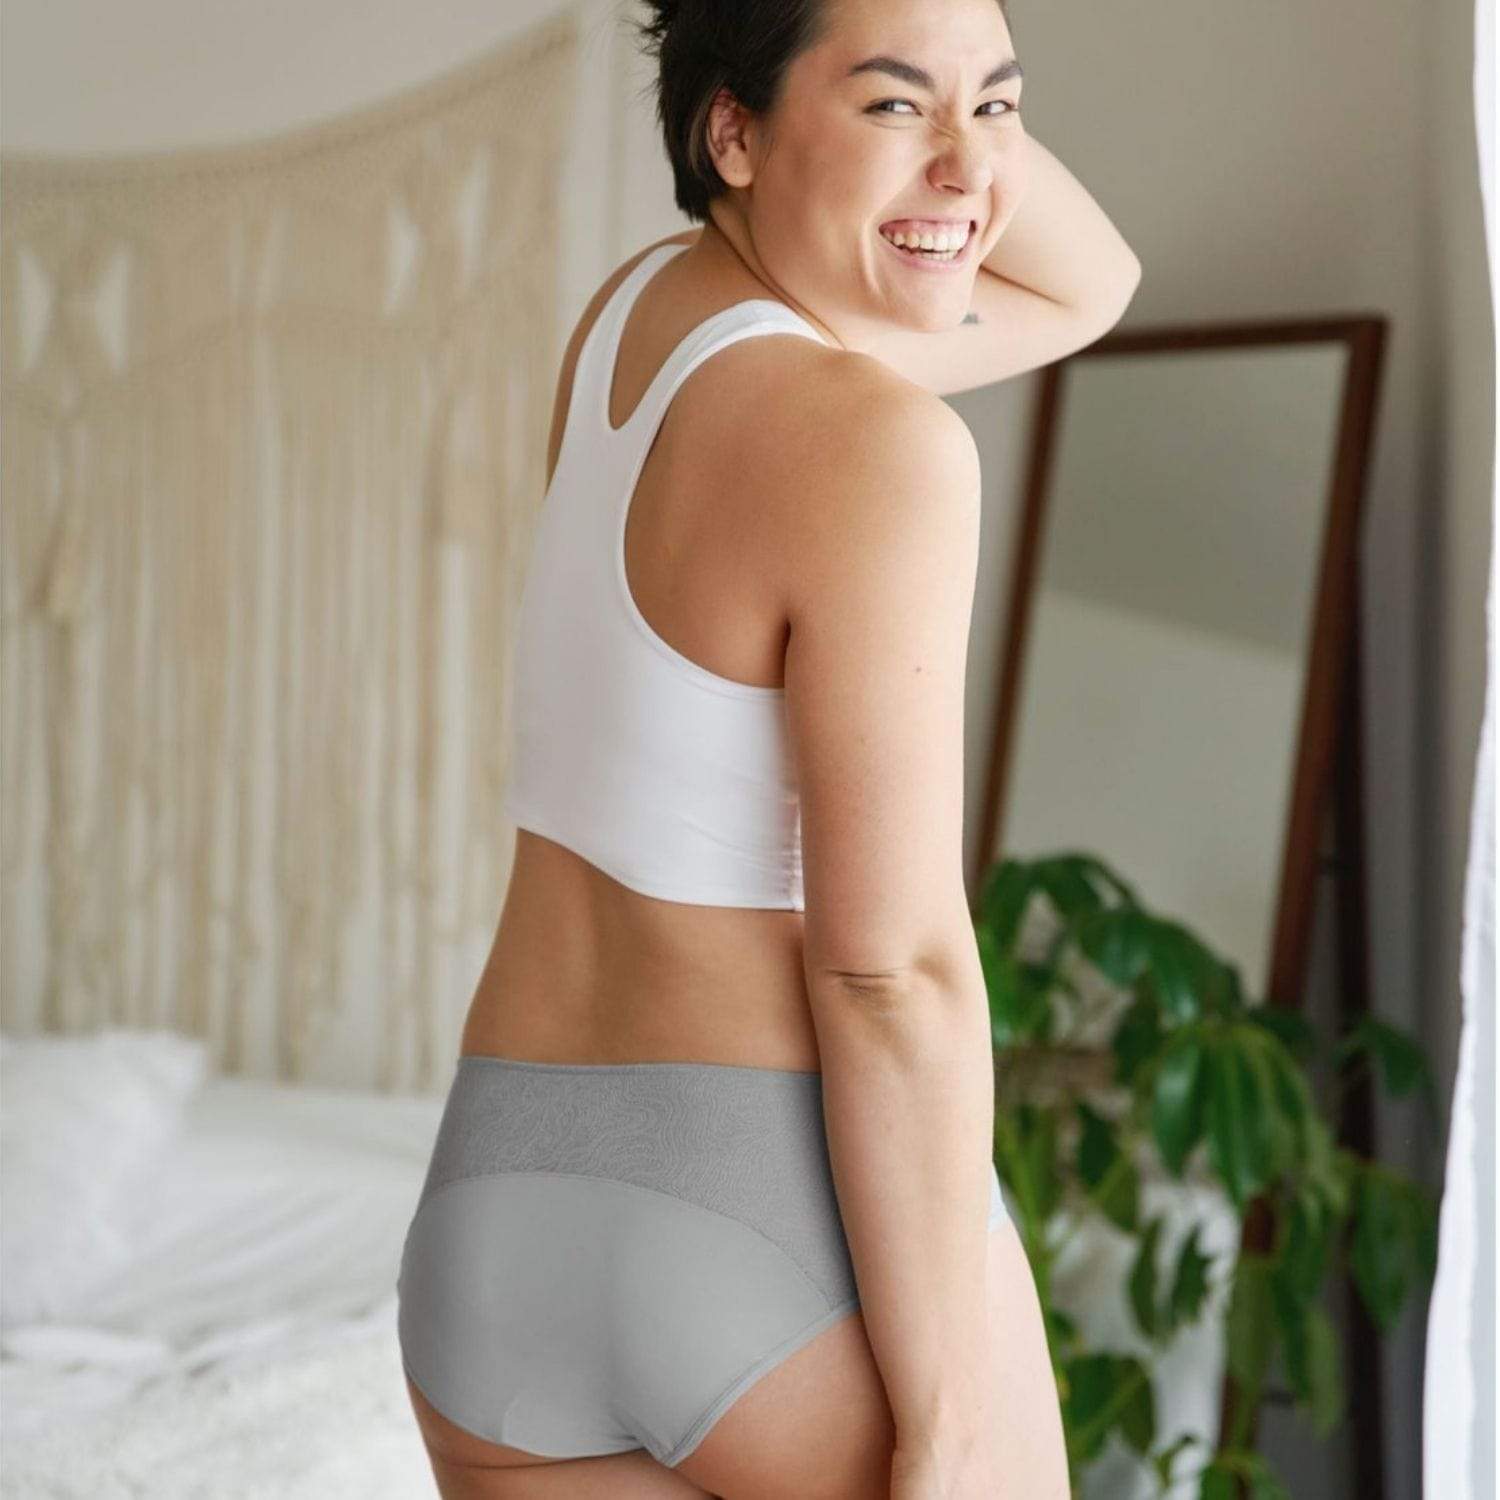 Saalt Period Underwear- Thong- Leakproof, Light Absorbency, Recycled